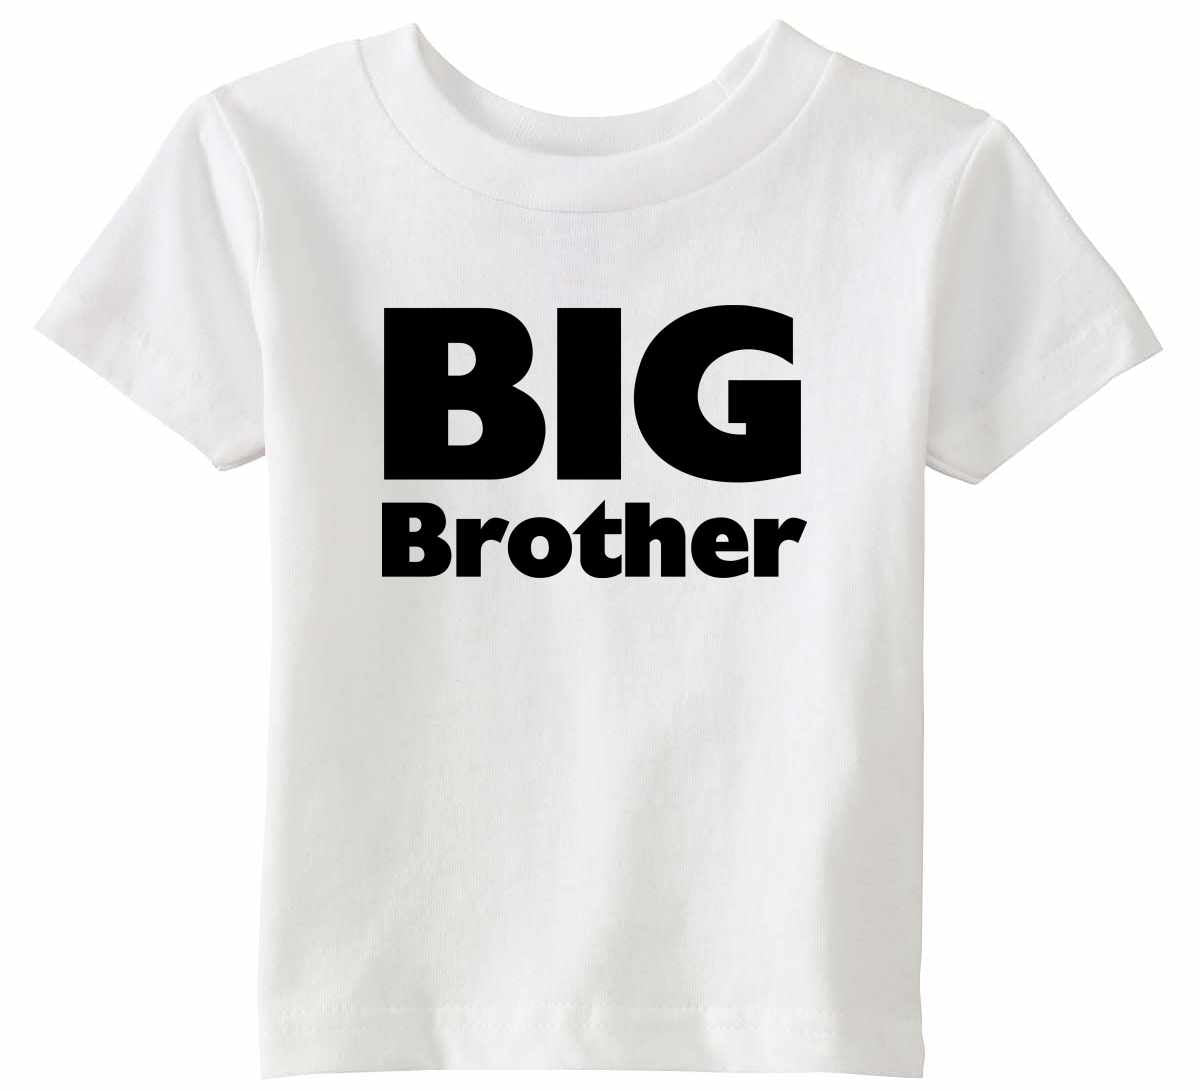 BIG BROTHER on Infant/Toddler  (#861-7)